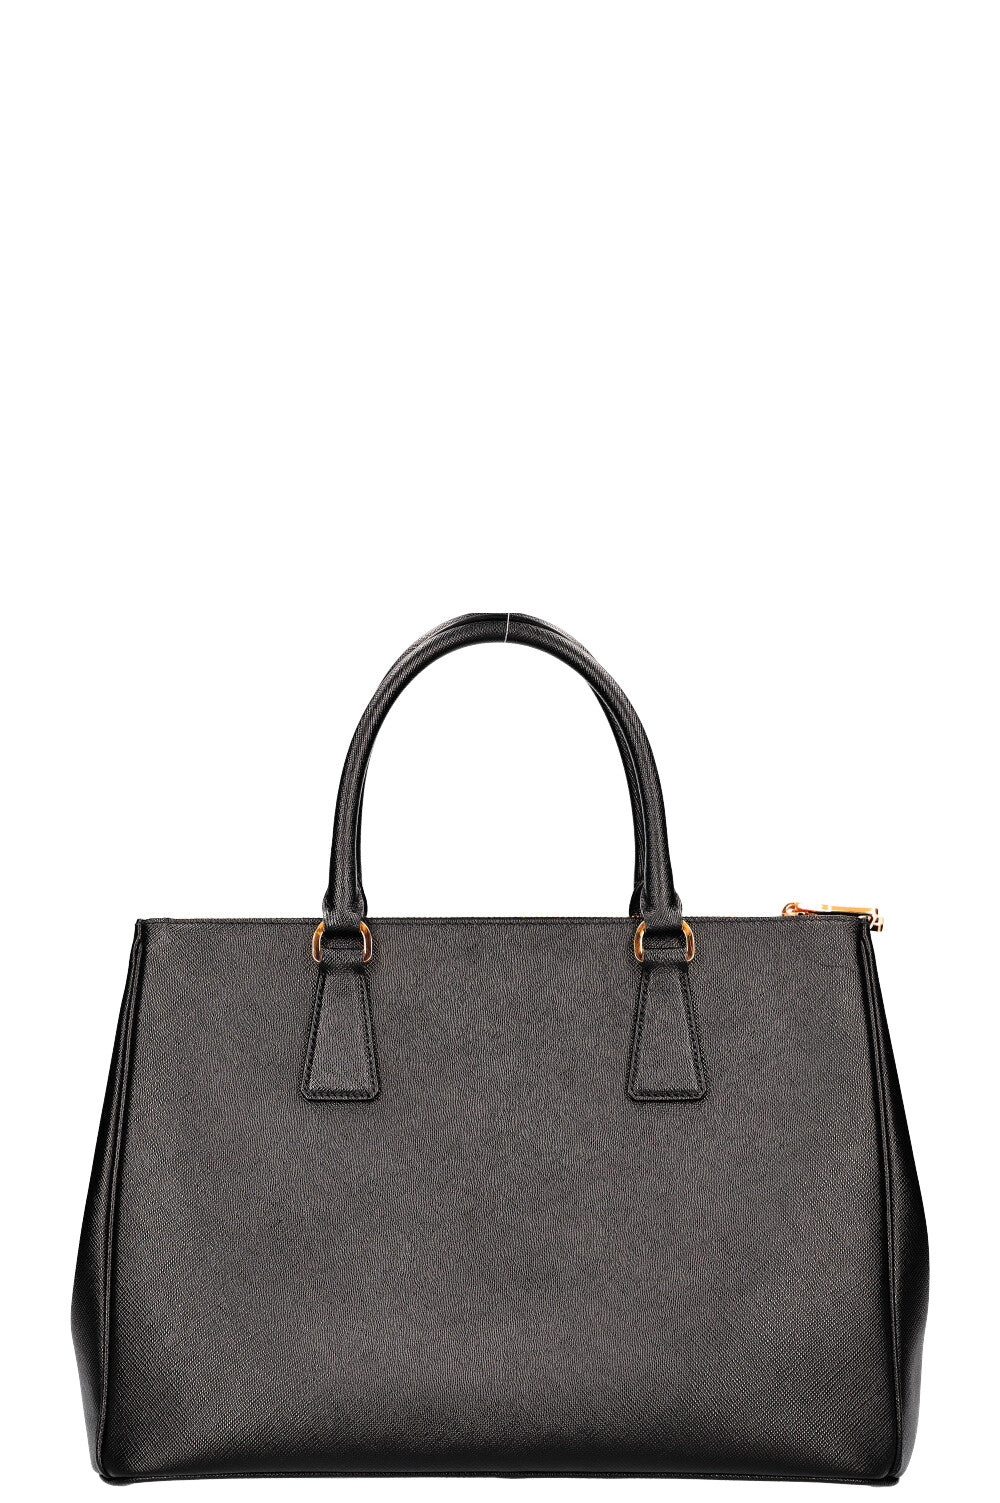 PRADA Galleria Handbag Large Saffiano Black